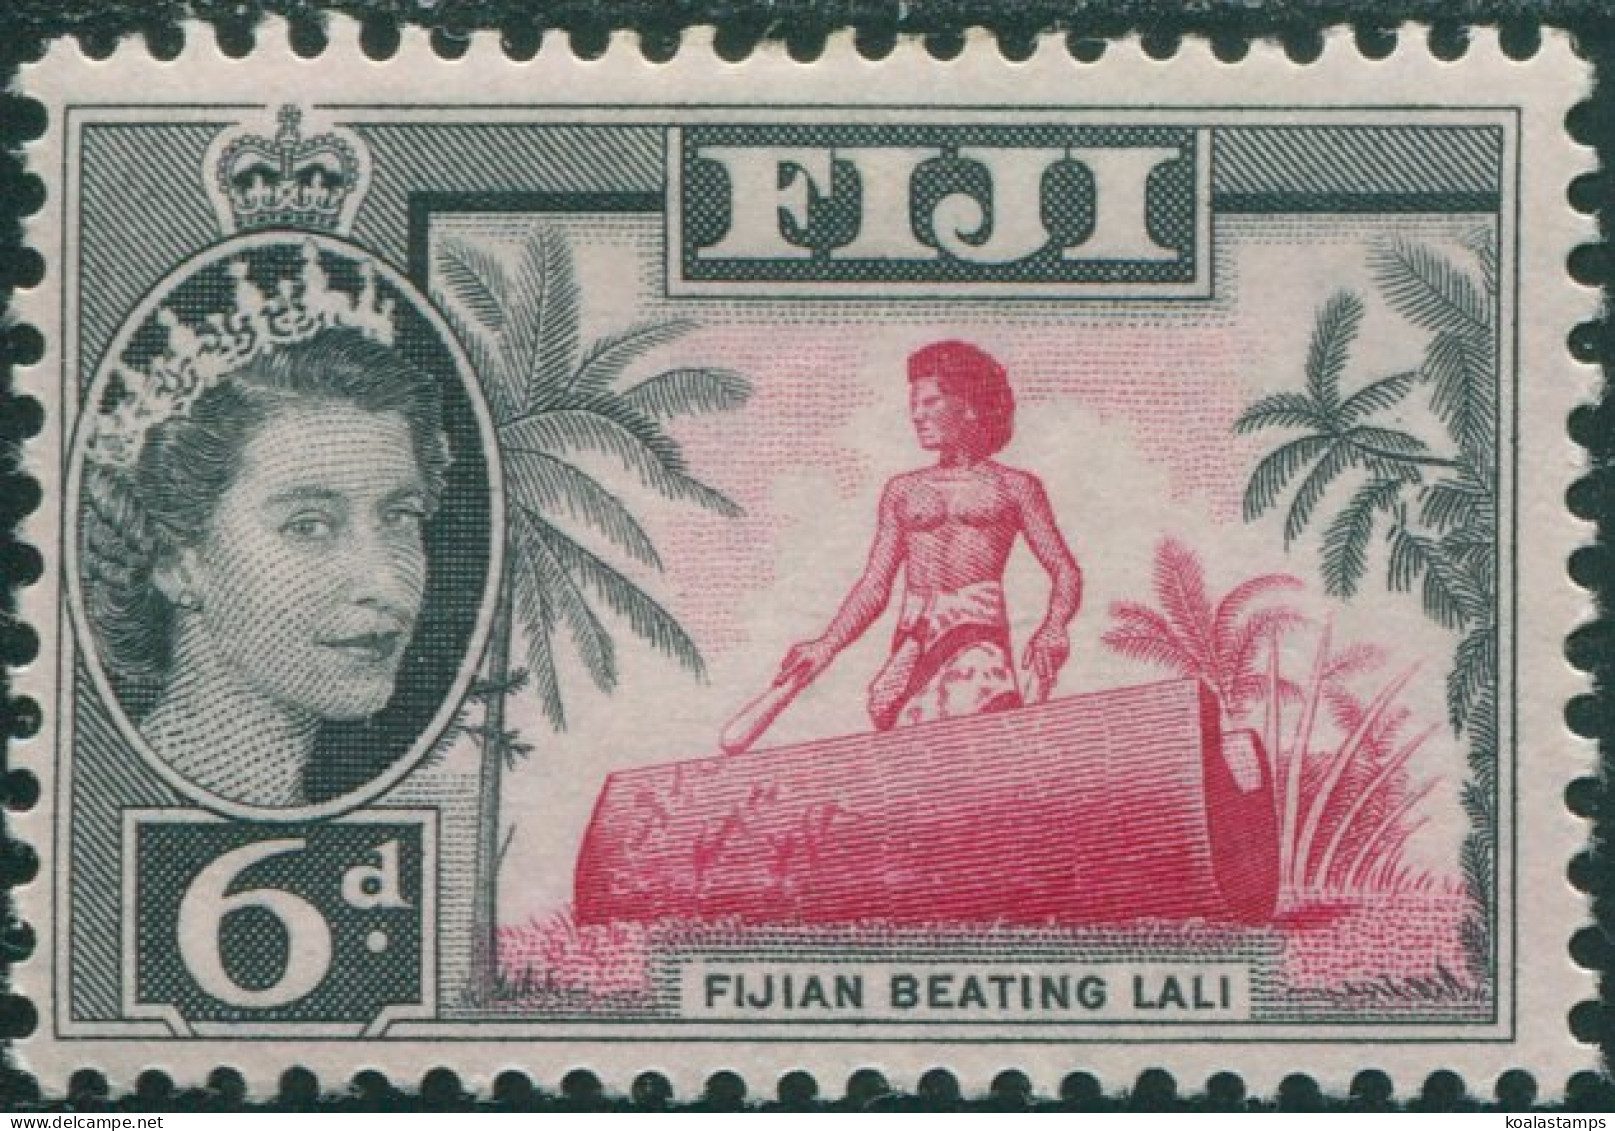 Fiji 1959 SG303 6d Carmine And Black Fijian Beating Lali QEII MNH - Fiji (1970-...)